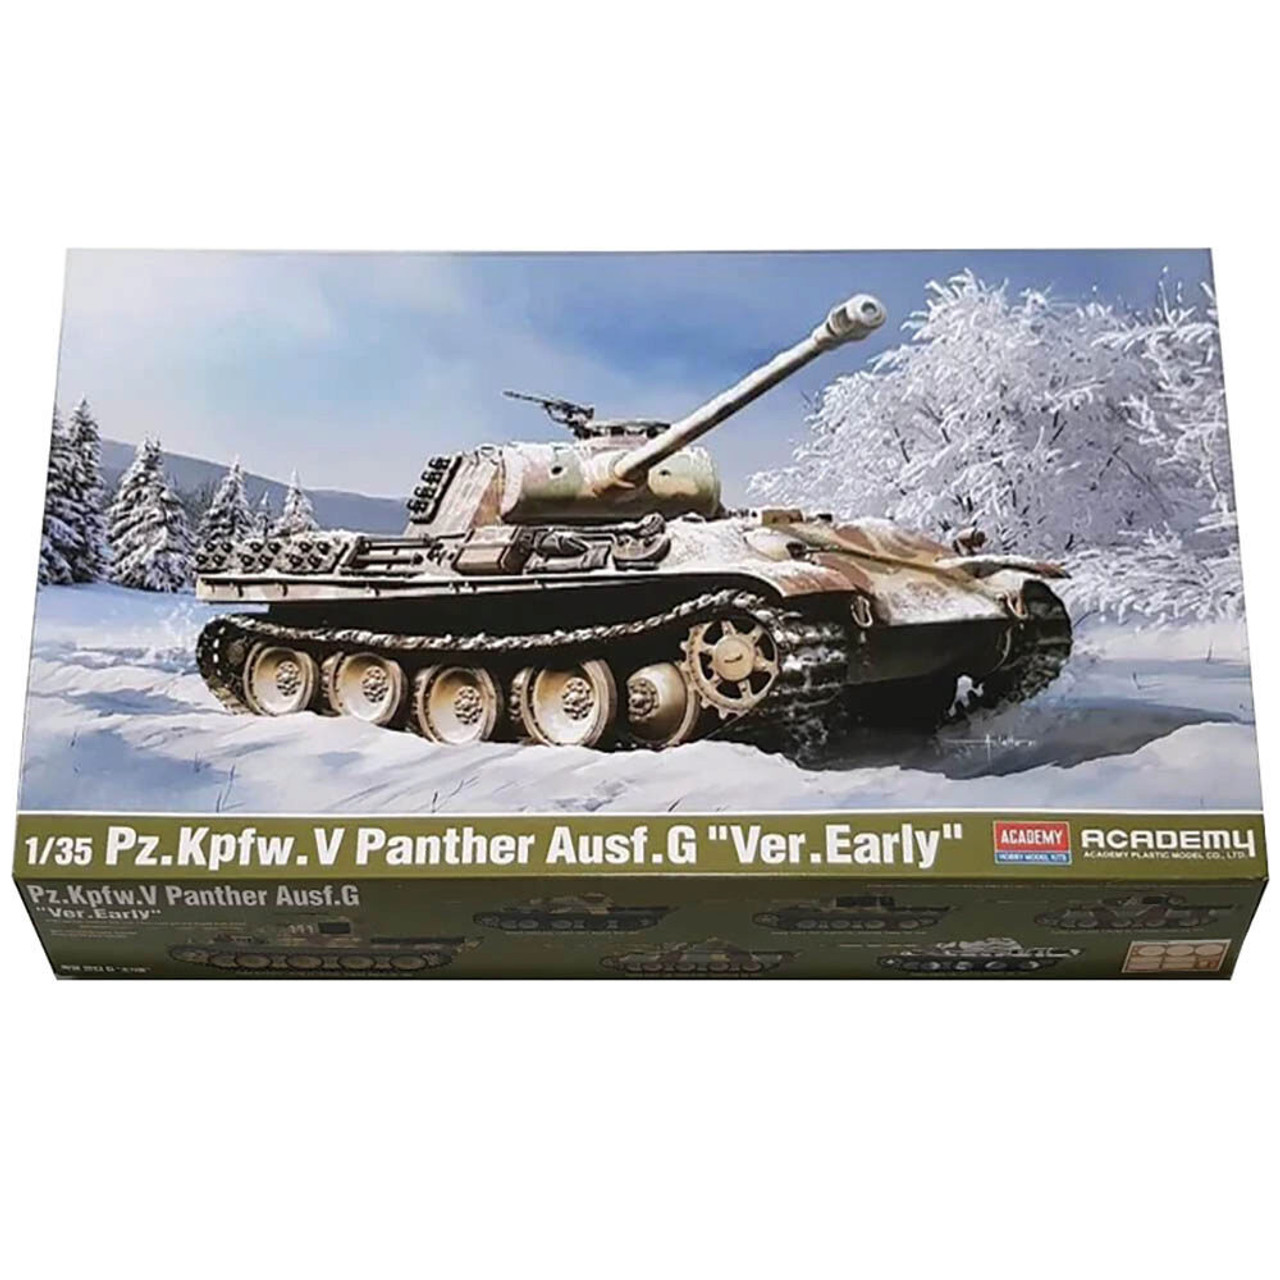 Pz.Kpfw.V Panther Ausf.G 1/35 Kit Academy (13529)